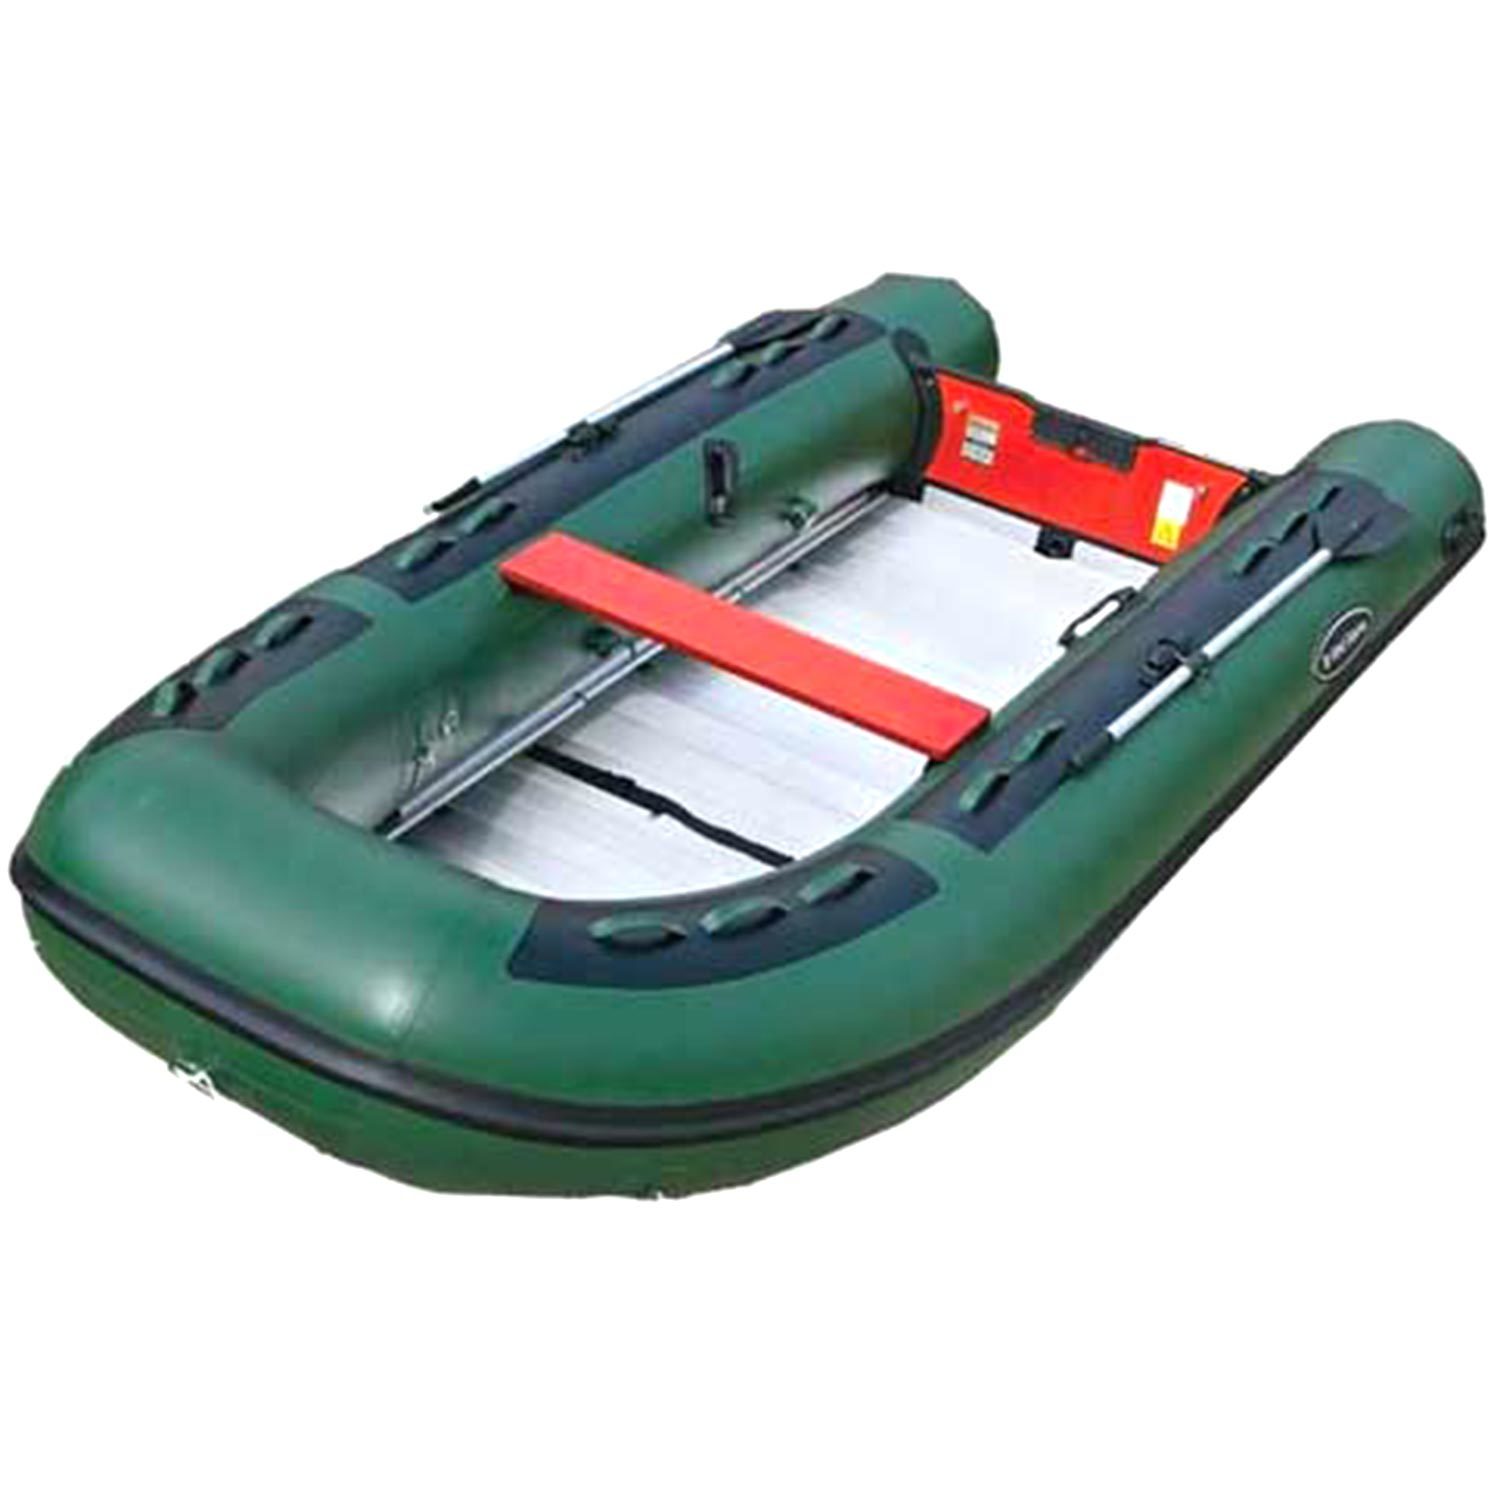 WEST MARINE AL-390 Heavy Duty PVC Inflatable Sport Boat